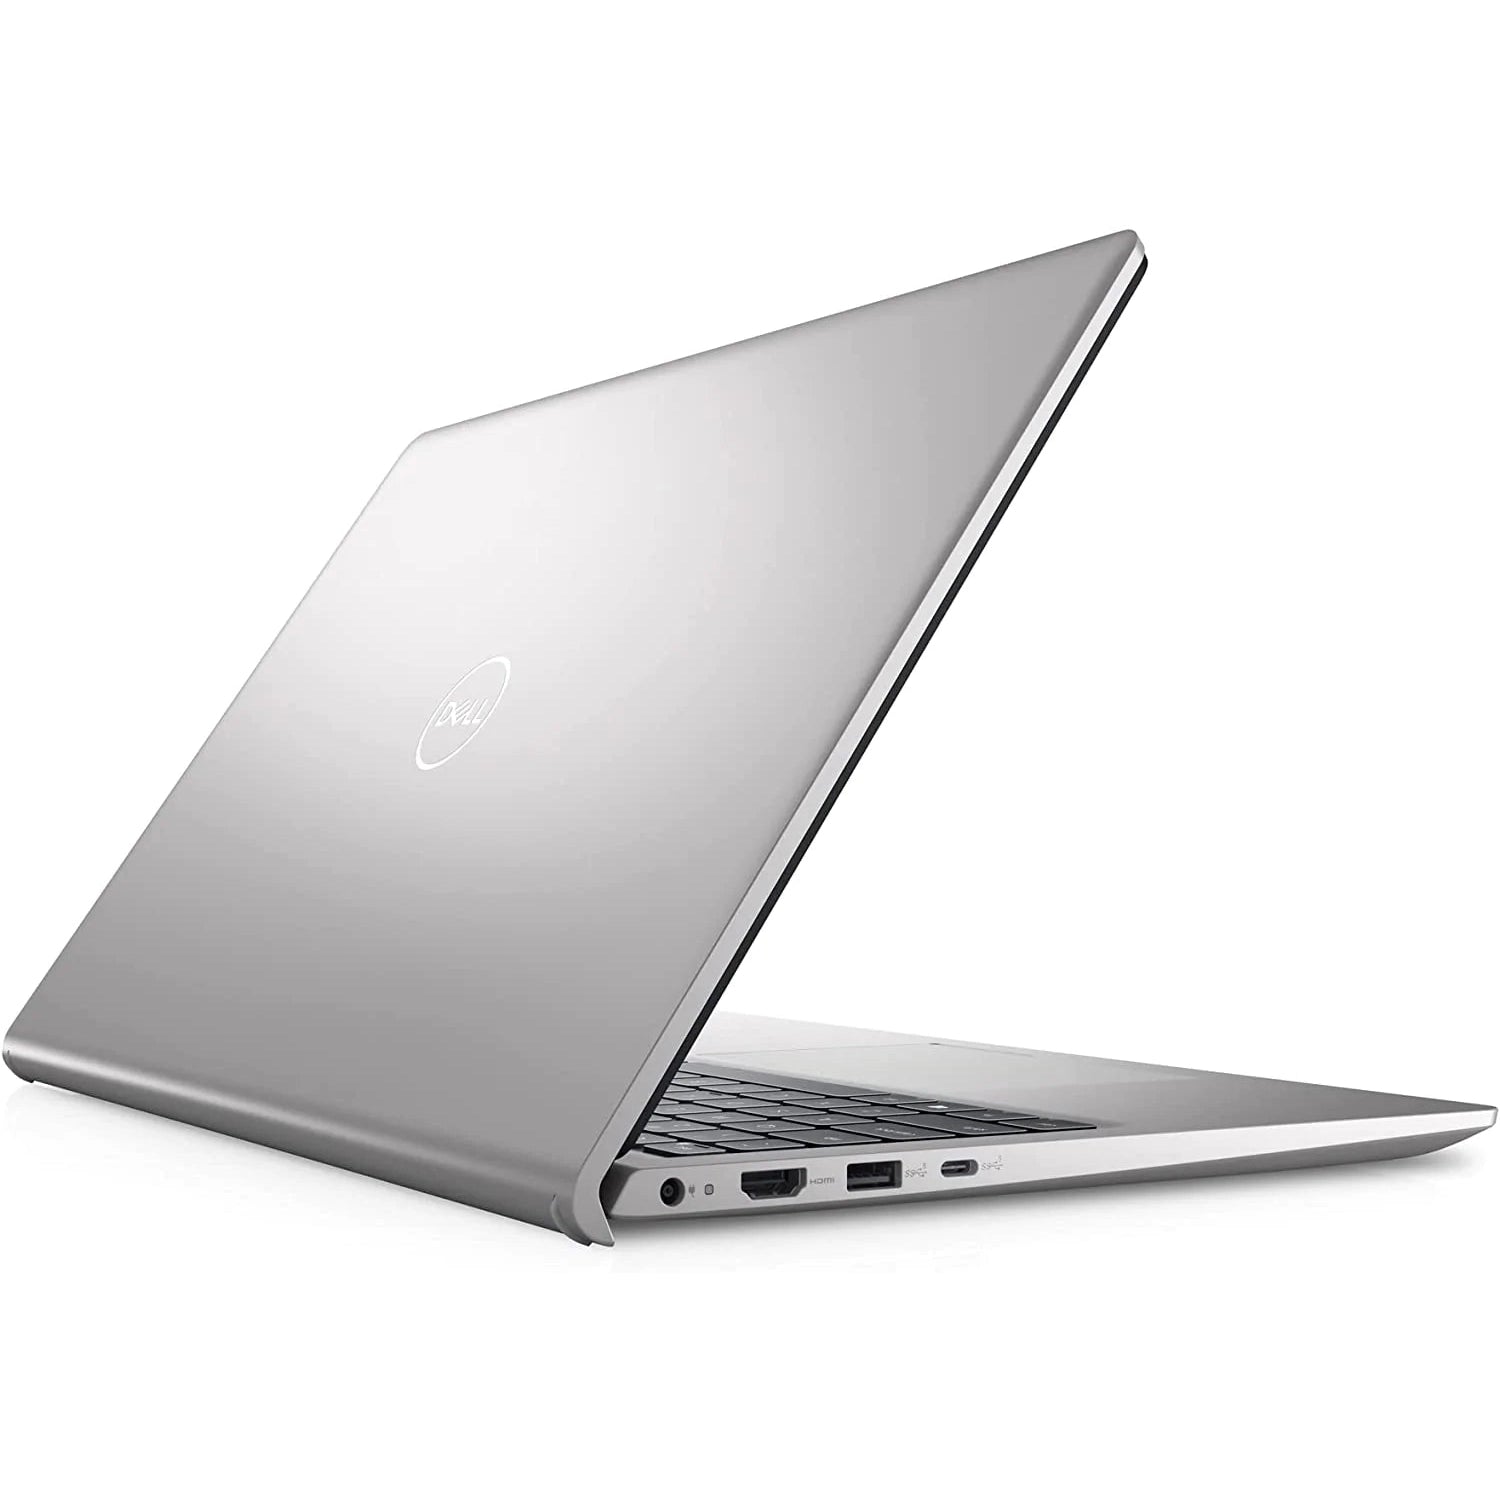 Dell Inspiron 15 3511 Laptop, Intel Core i3, 4GB RAM, 128GB SSD, 15.6", Platinum Silver - Refurbished Pristine